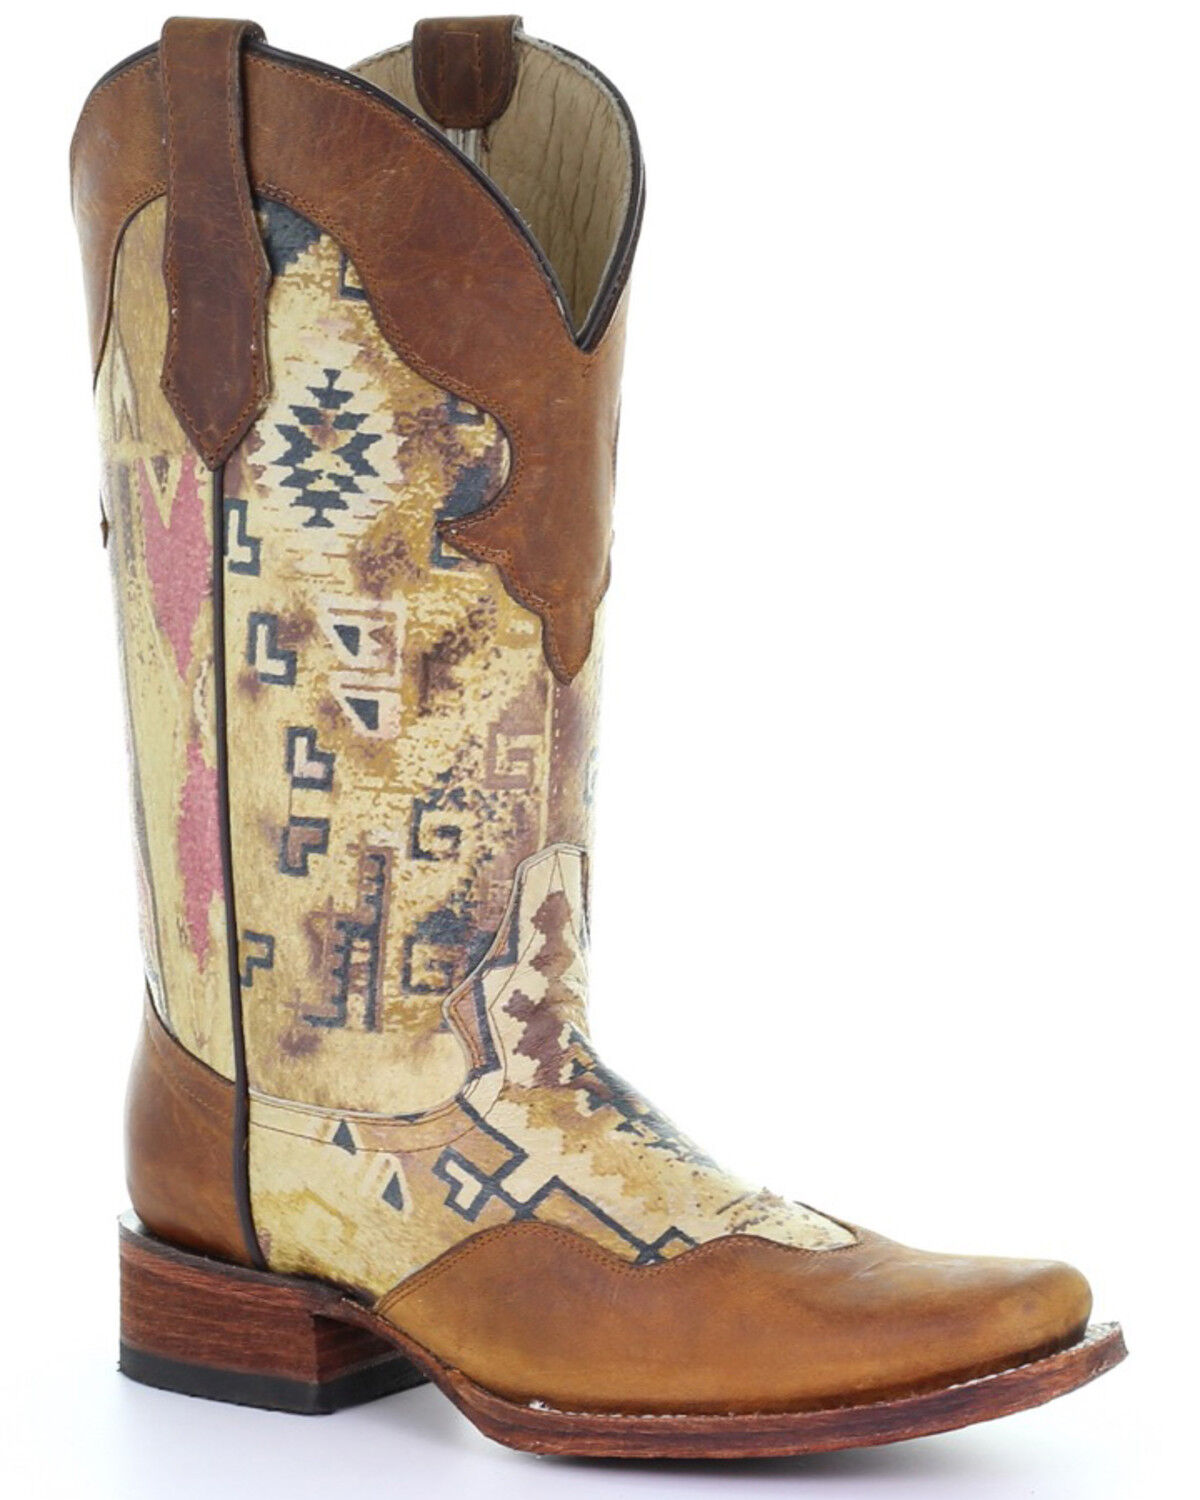 corral women's aztec boots